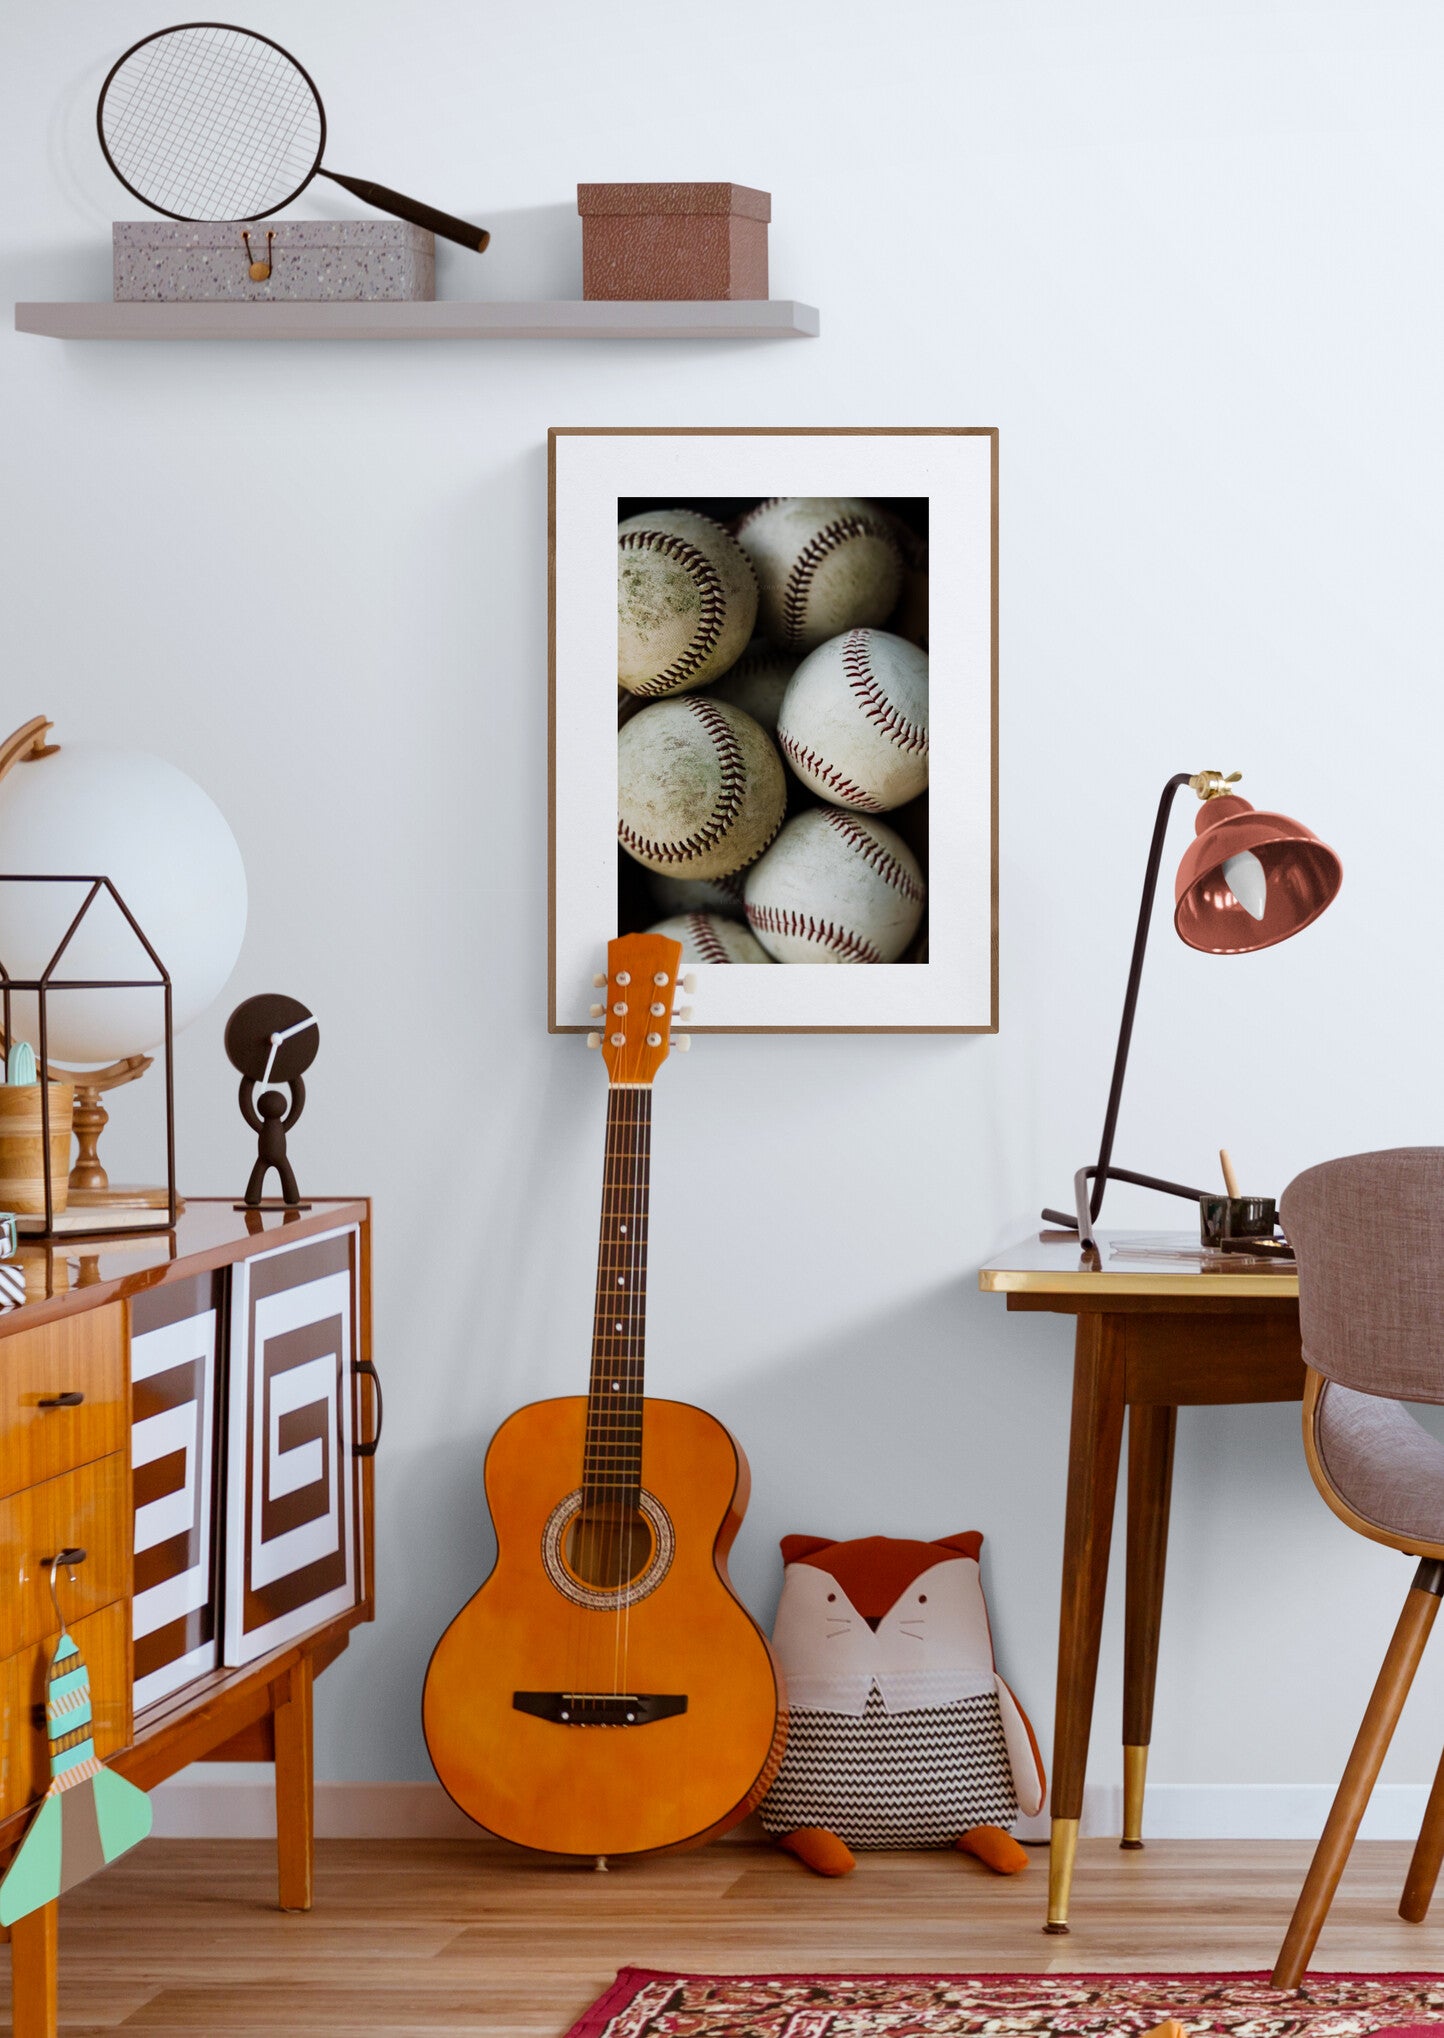 Baseballs Photograph Print as wall art in a children's bedroom